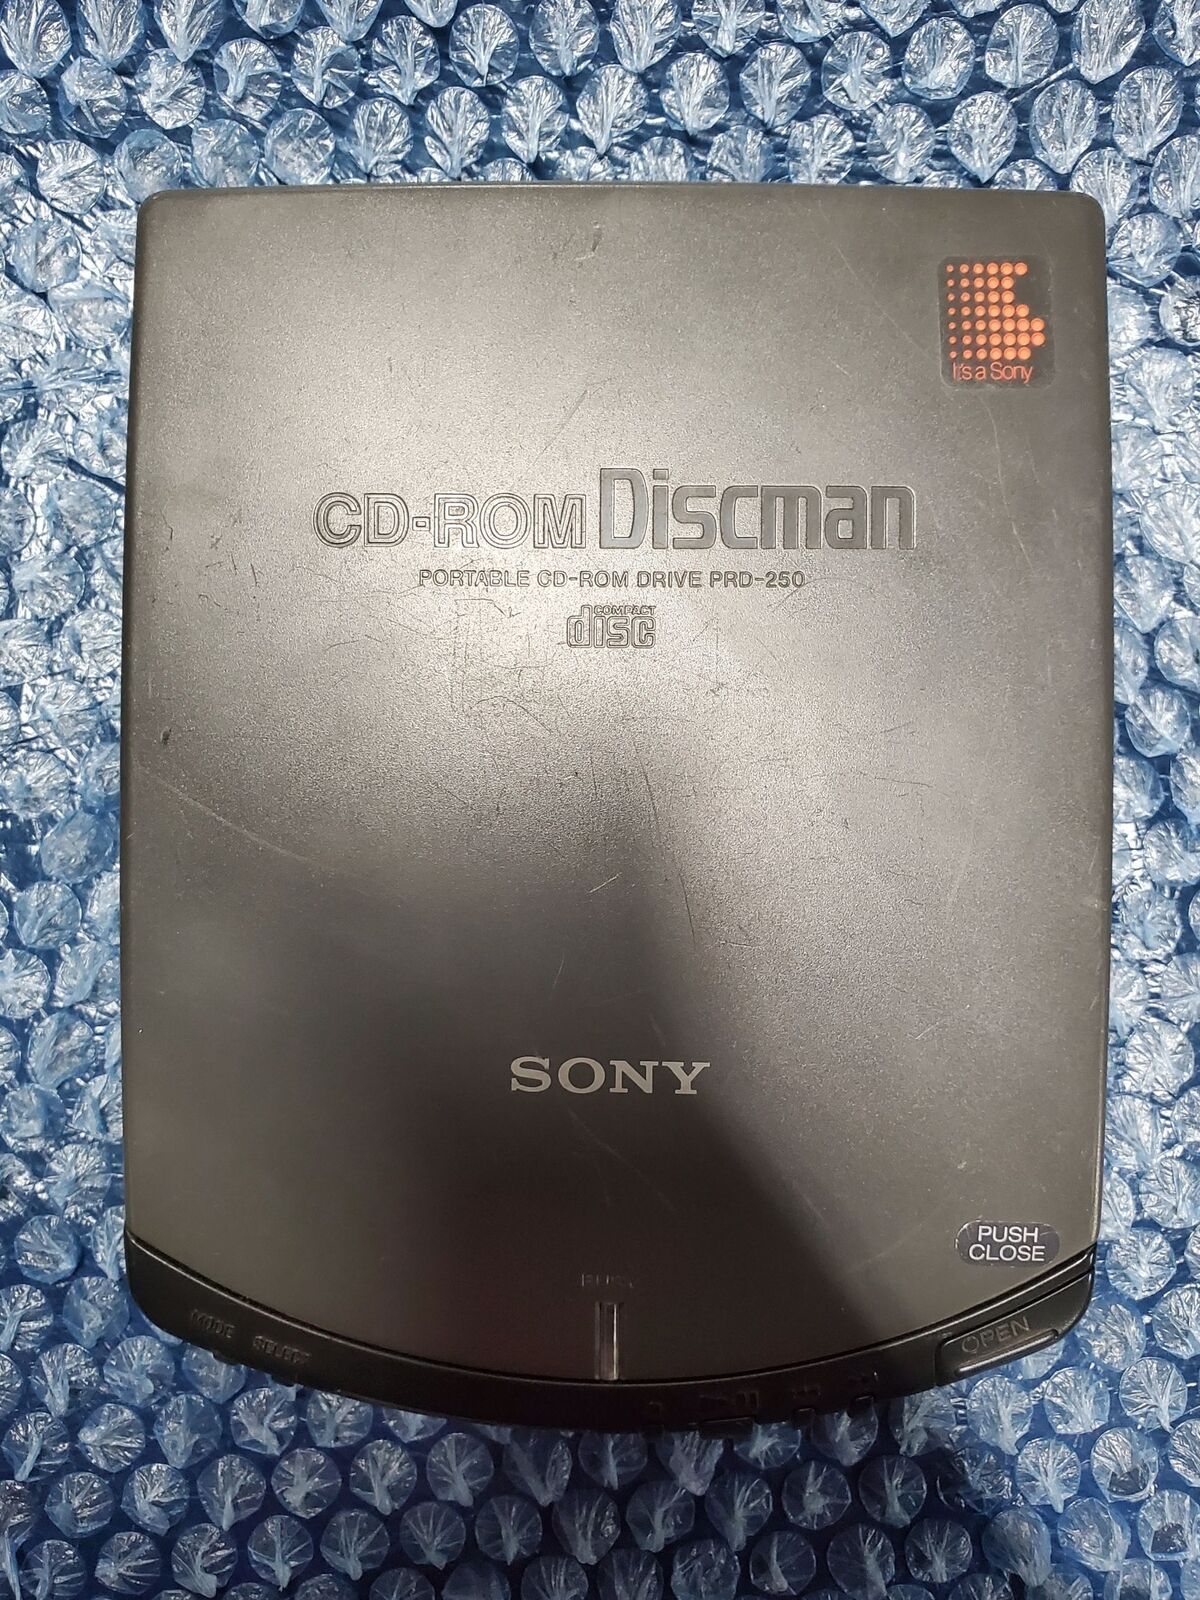 Sony CD-ROM Discman Portable CD-ROM Drive PRD-650